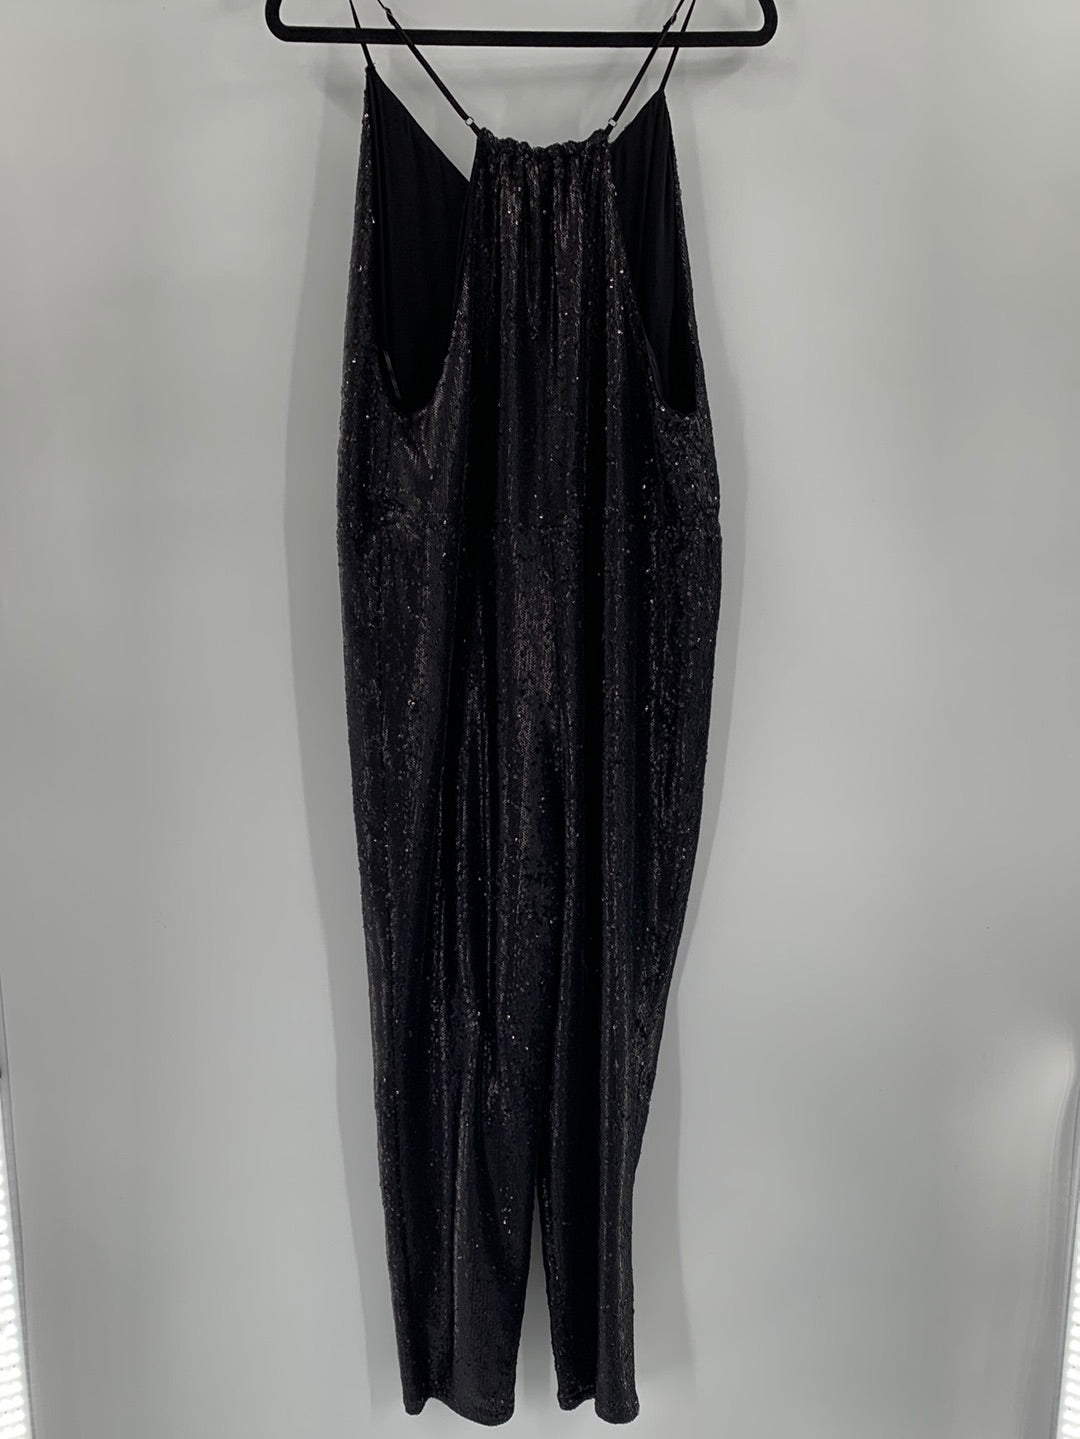 Free People - Sequin Black Jumpsuit (Size Medium)